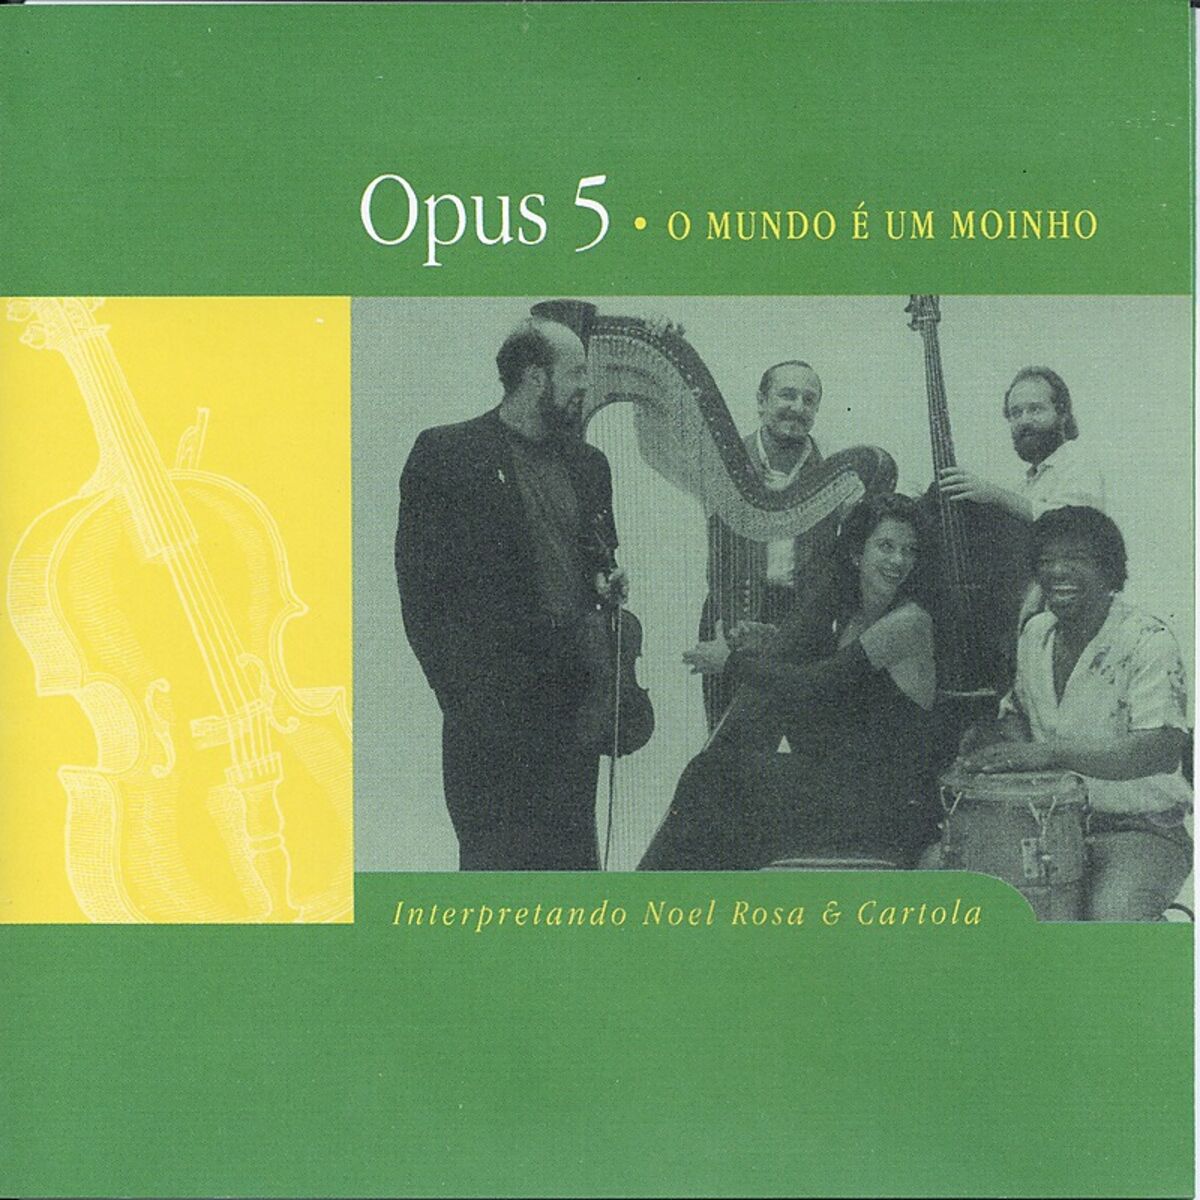 Opus 5: albums